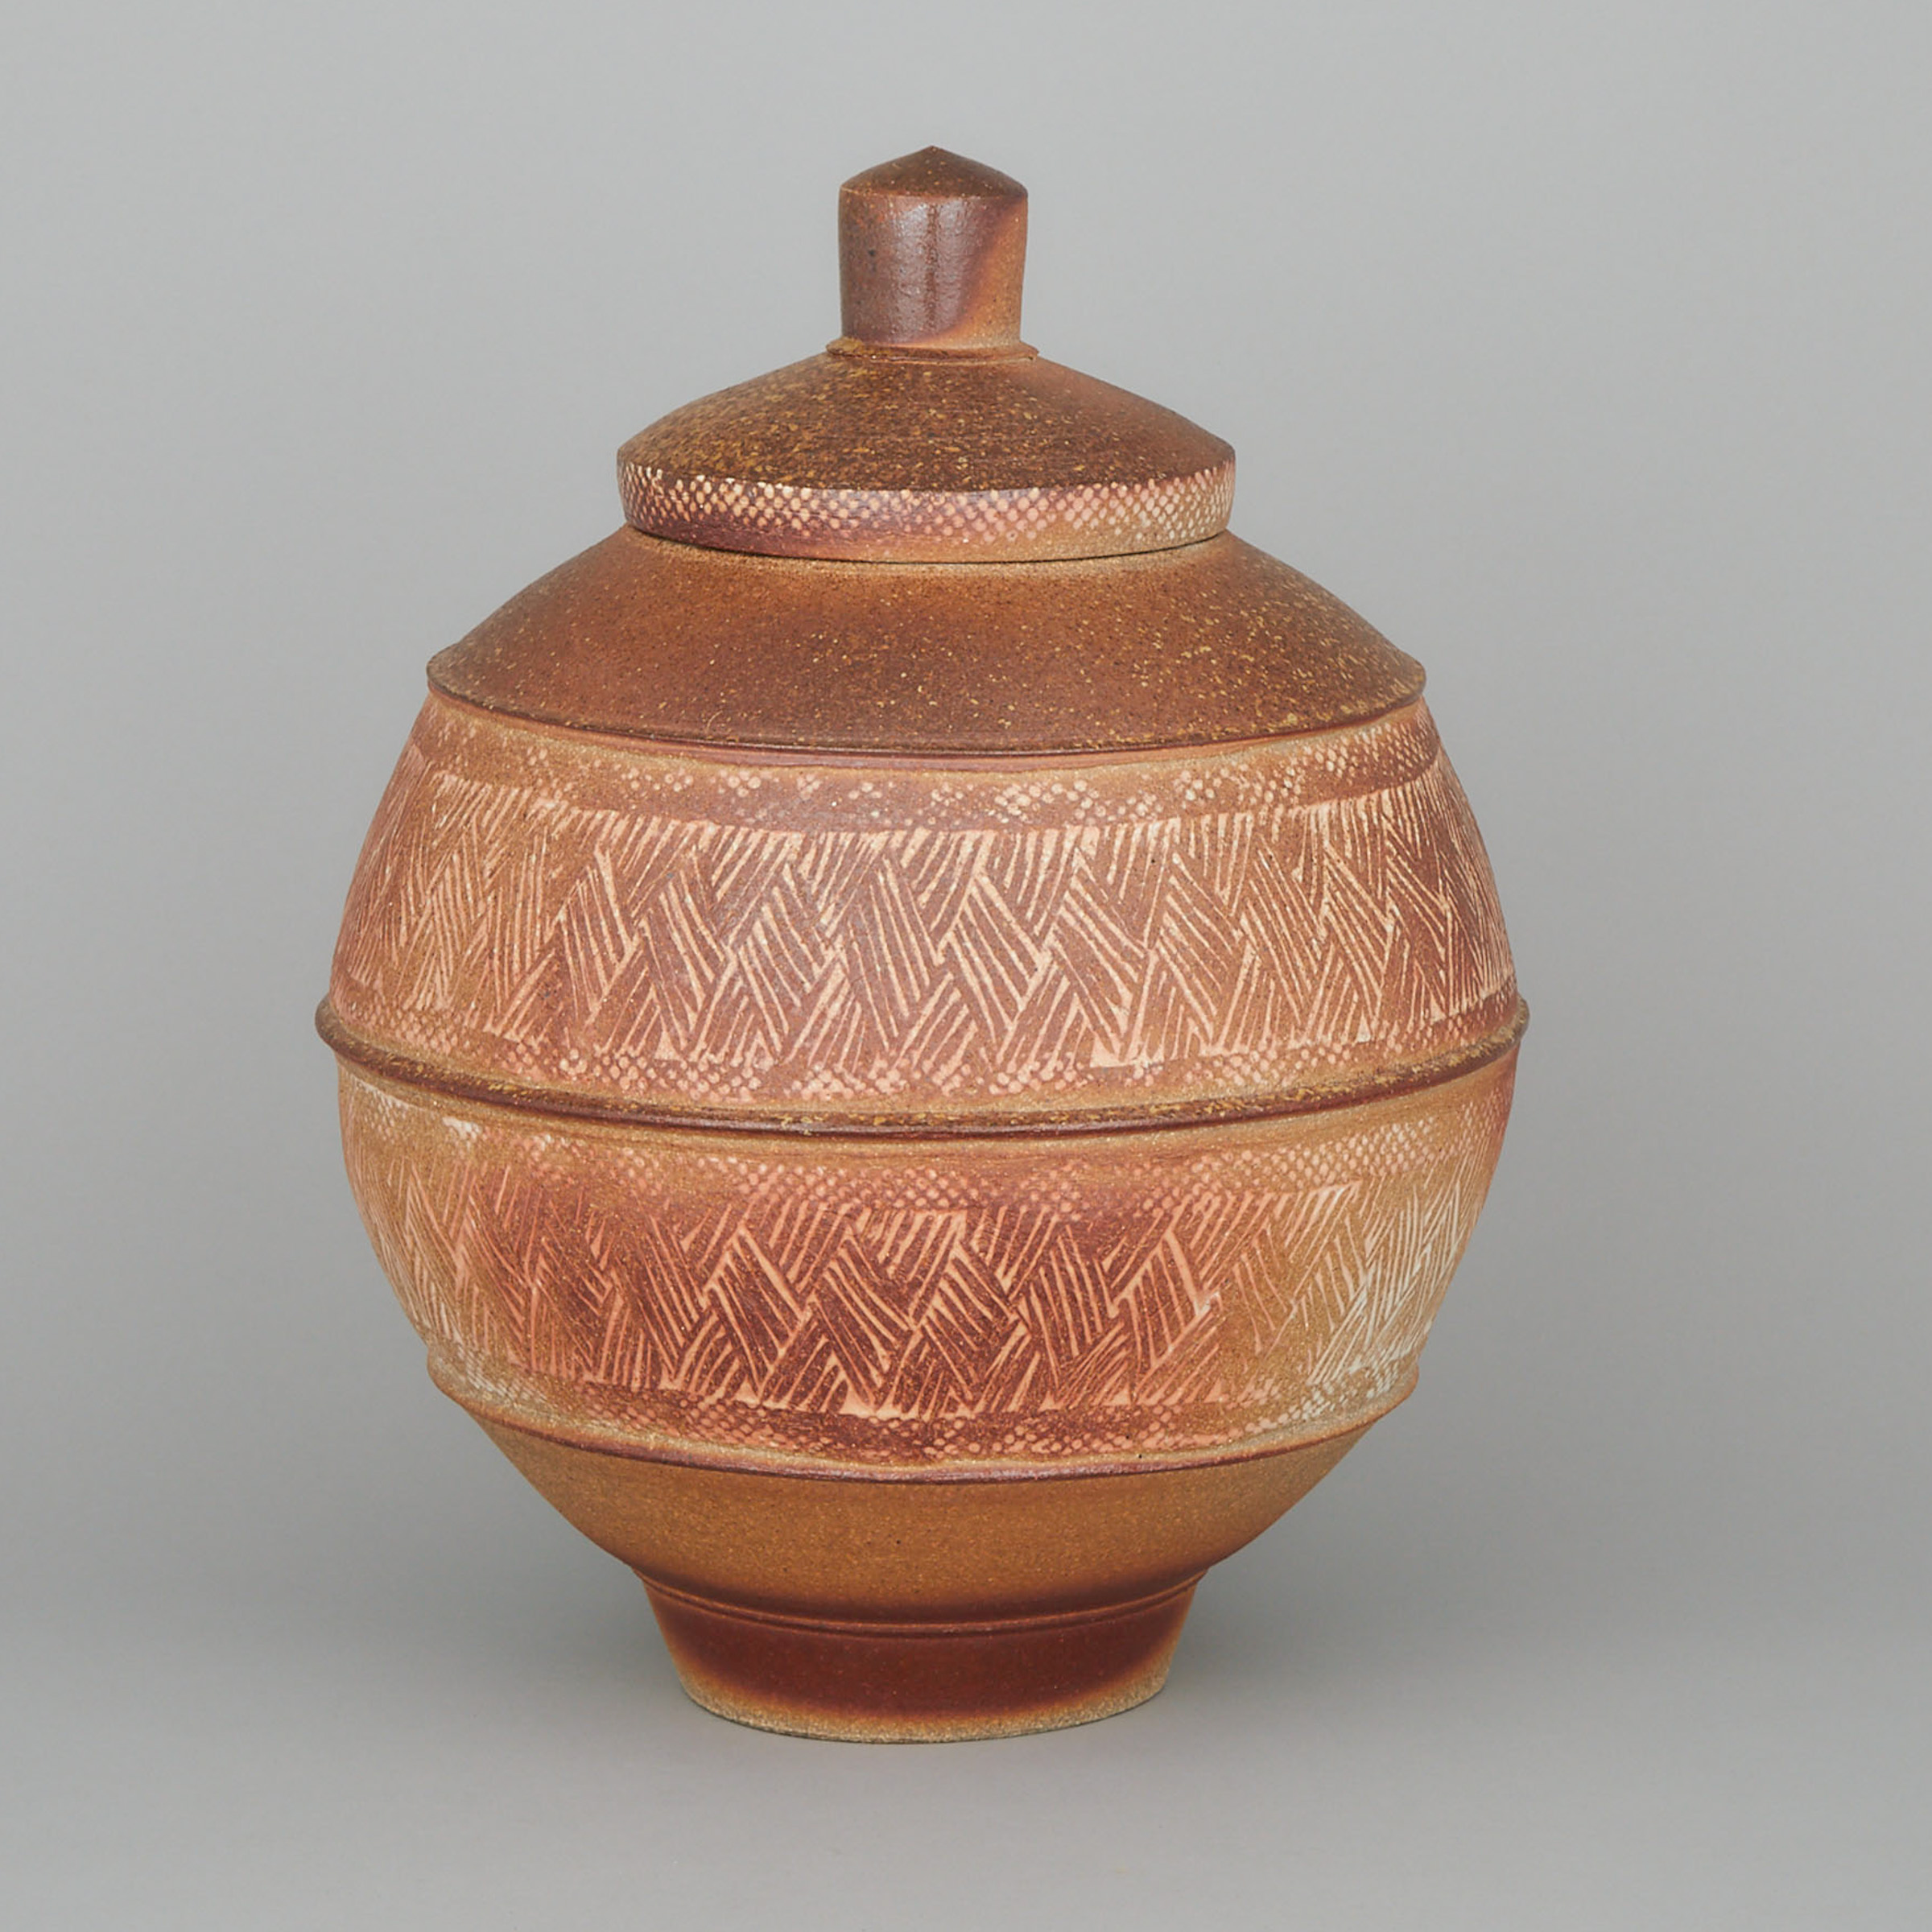 Bruce Cochrane (Canadian, b.1953), Stoneware Covered Jar, c.2014